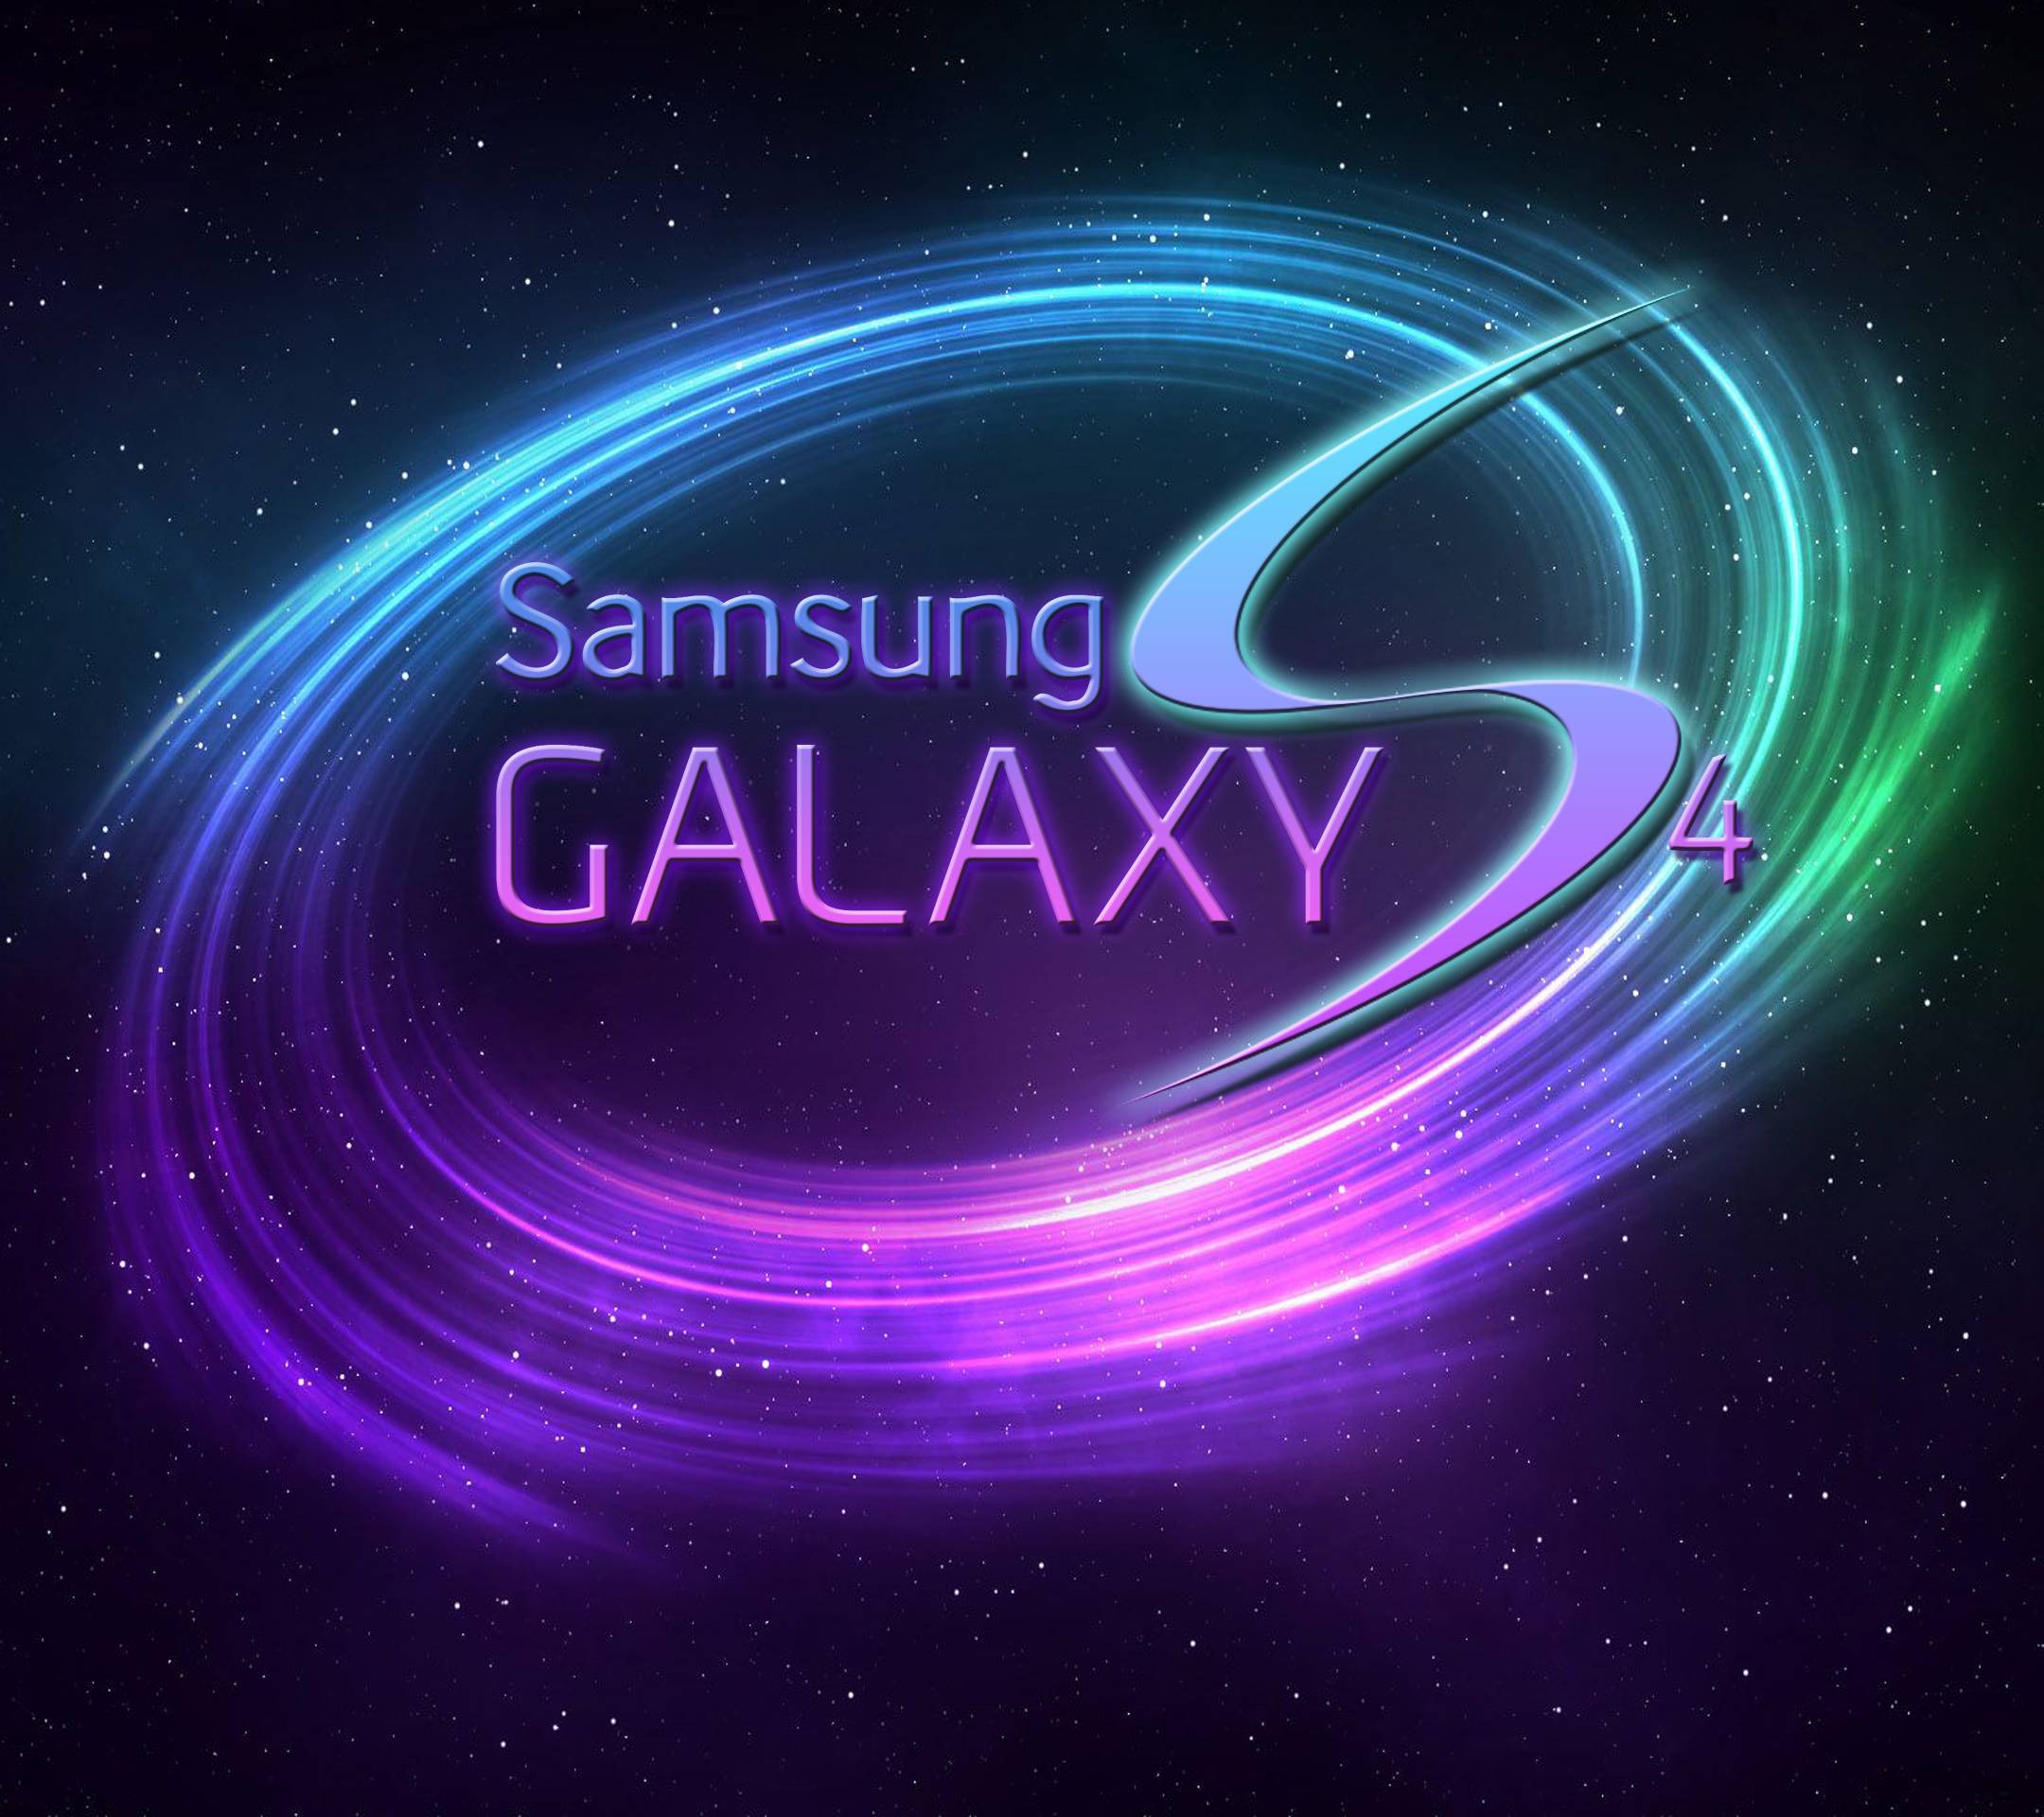 98+] Samsung Galaxy Logo Wallpapers - WallpaperSafari